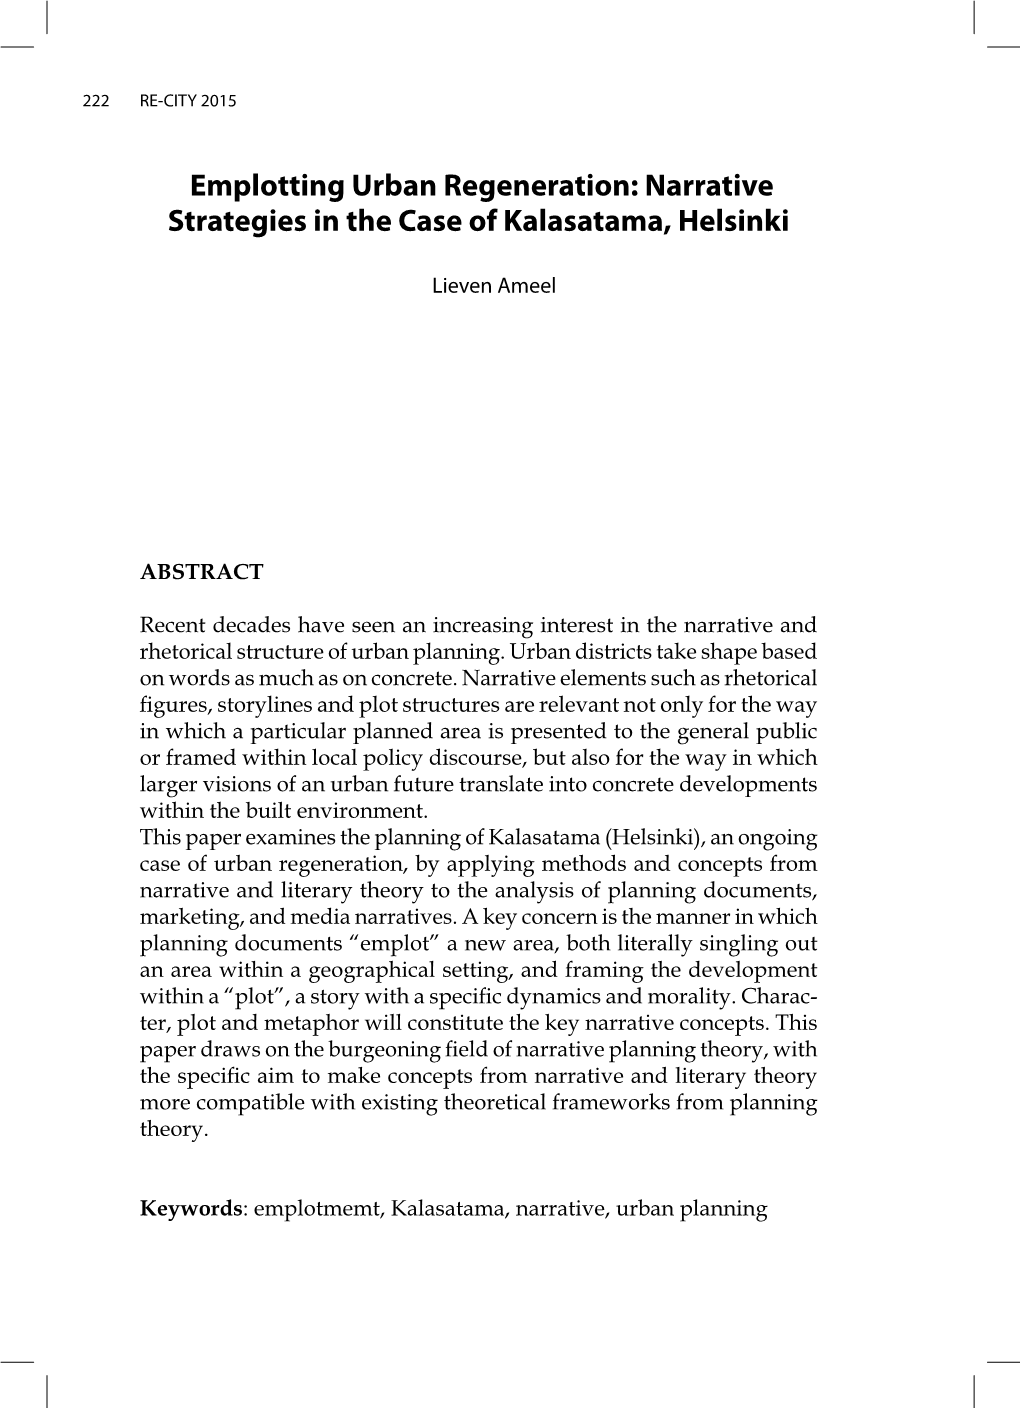 Emplotting Urban Regeneration: Narrative Strategies in the Case of Kalasatama, Helsinki